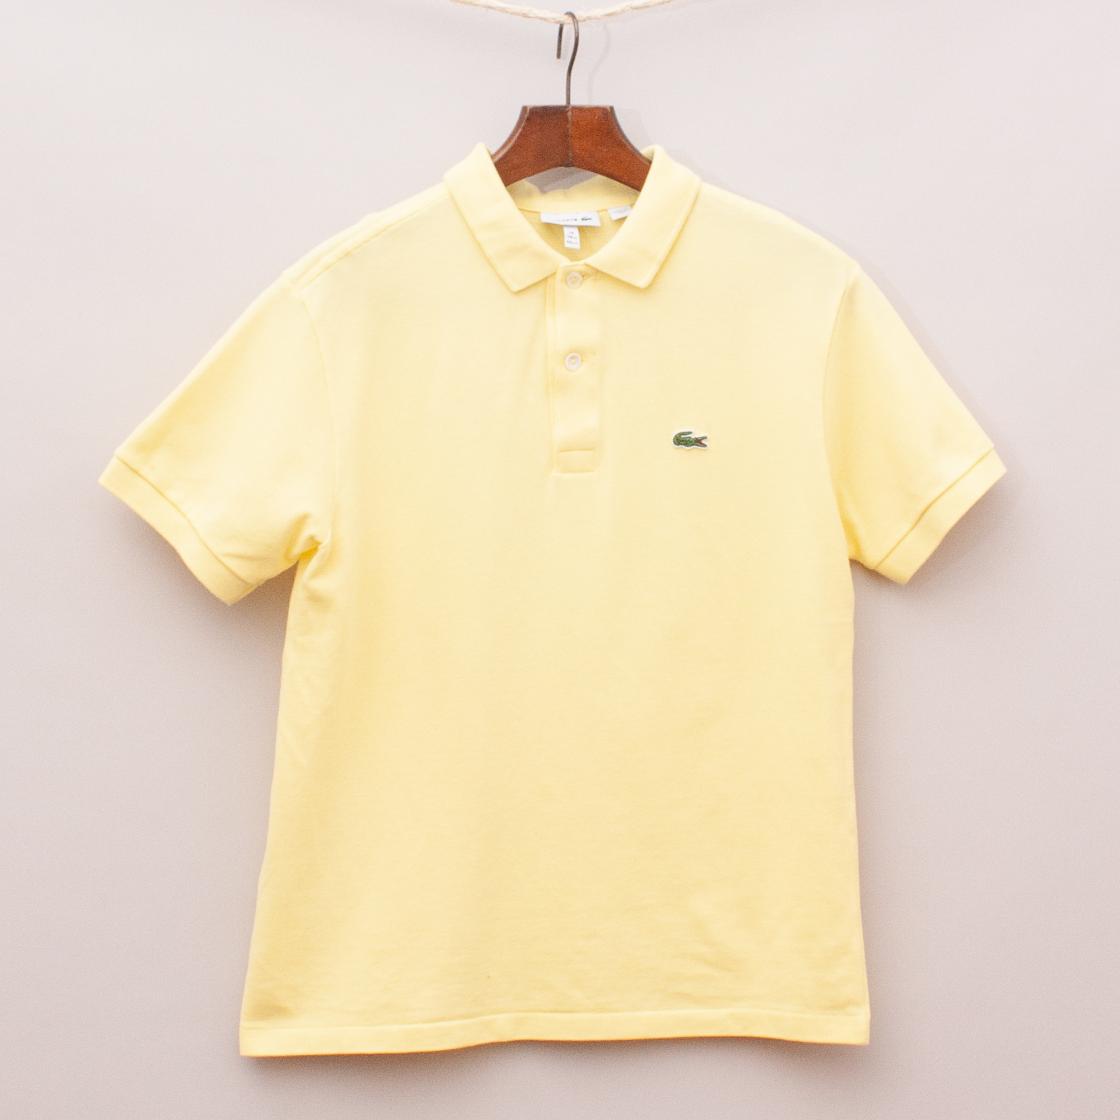 Lacoste Yellow Polo Shirt